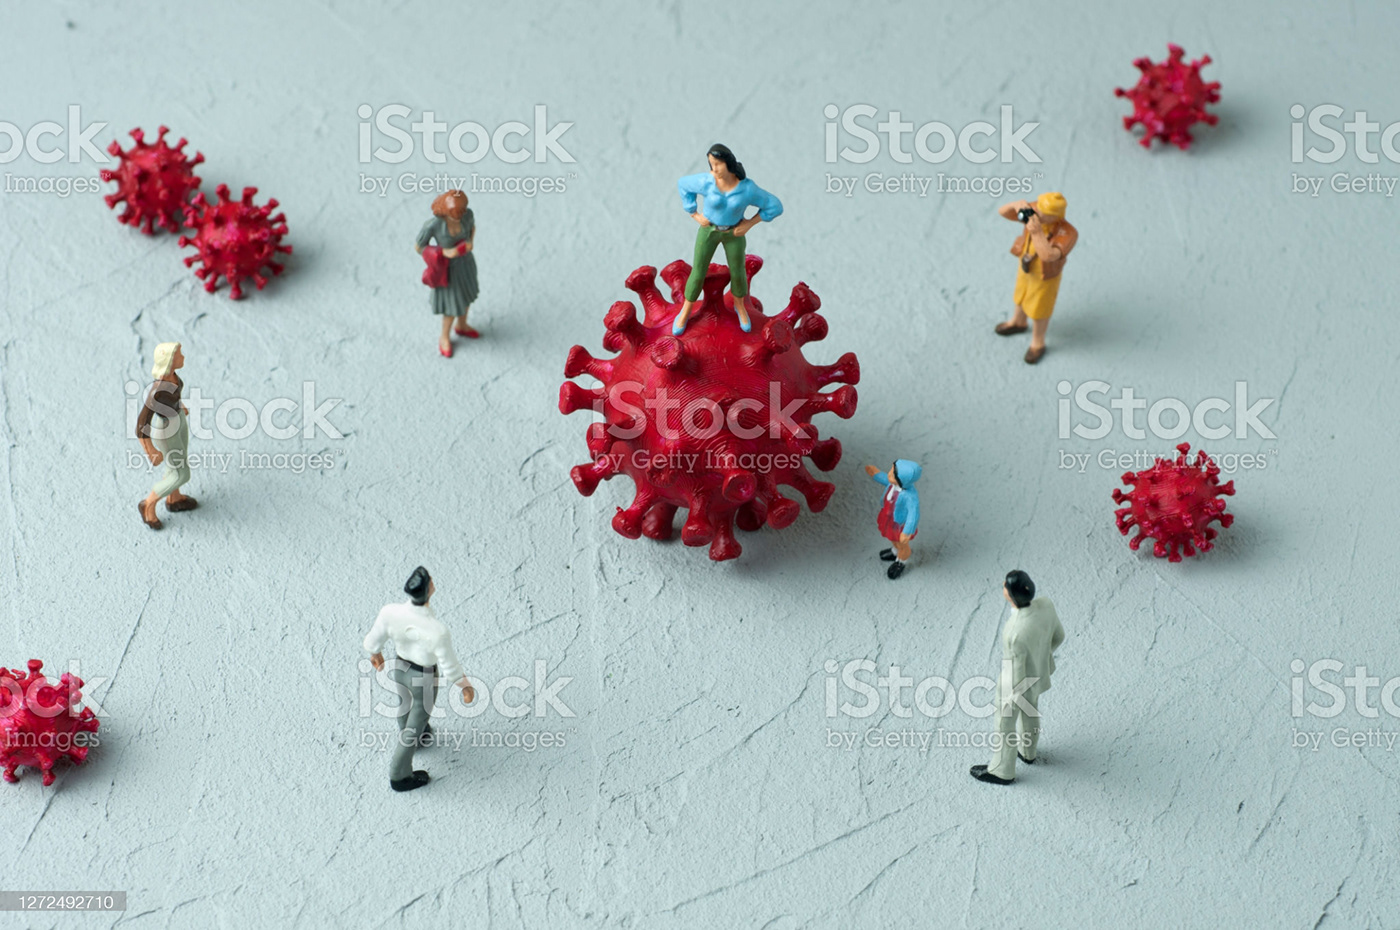 concepts Coronavirus COVID-19 epidemic fear figurine Health lockdown new normal people